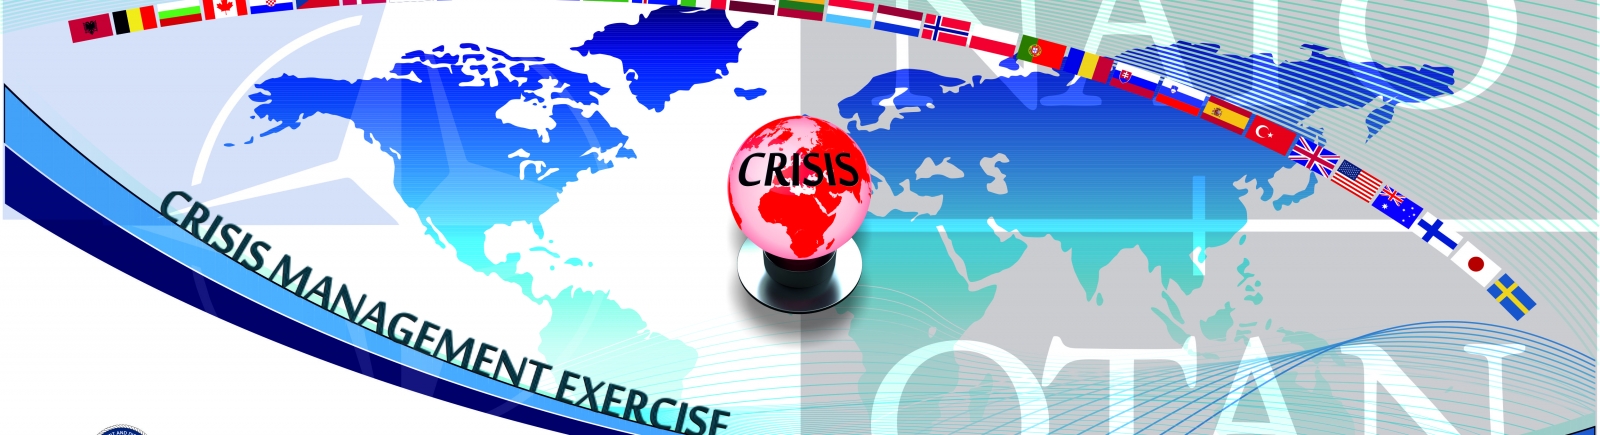 Bildresultat för Crisis Management Exercise 2017